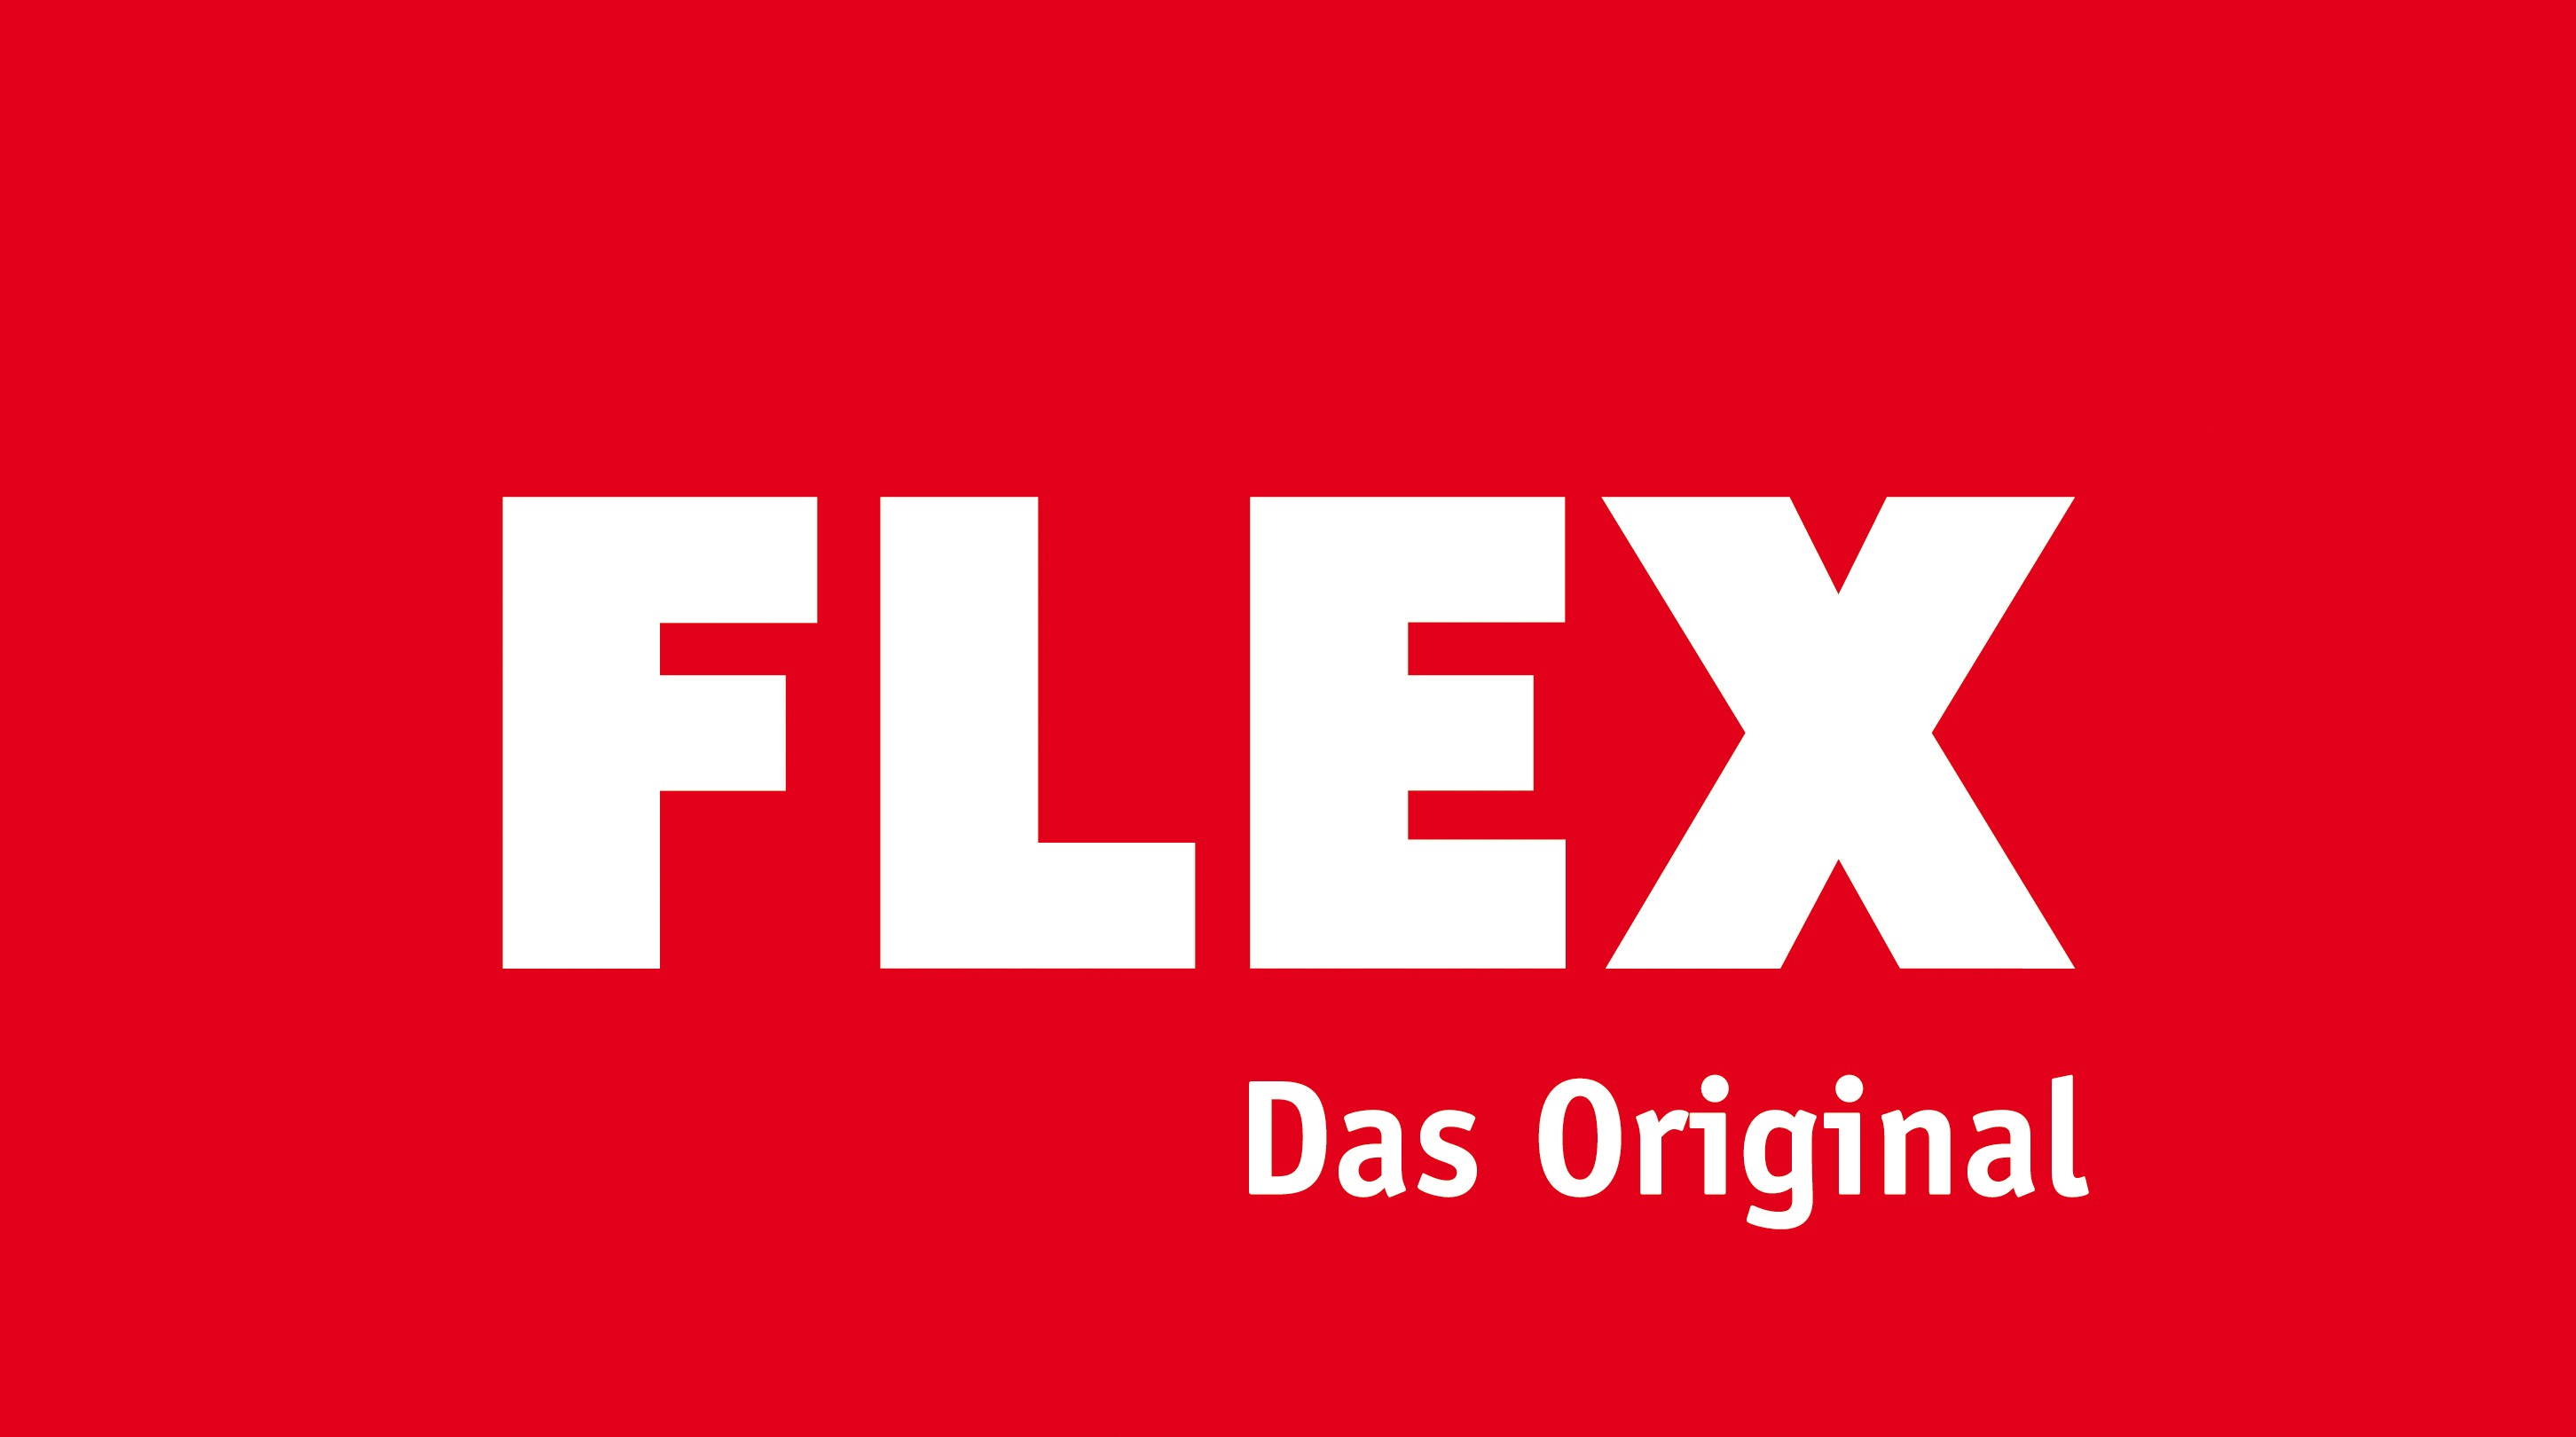 Logo_Flex